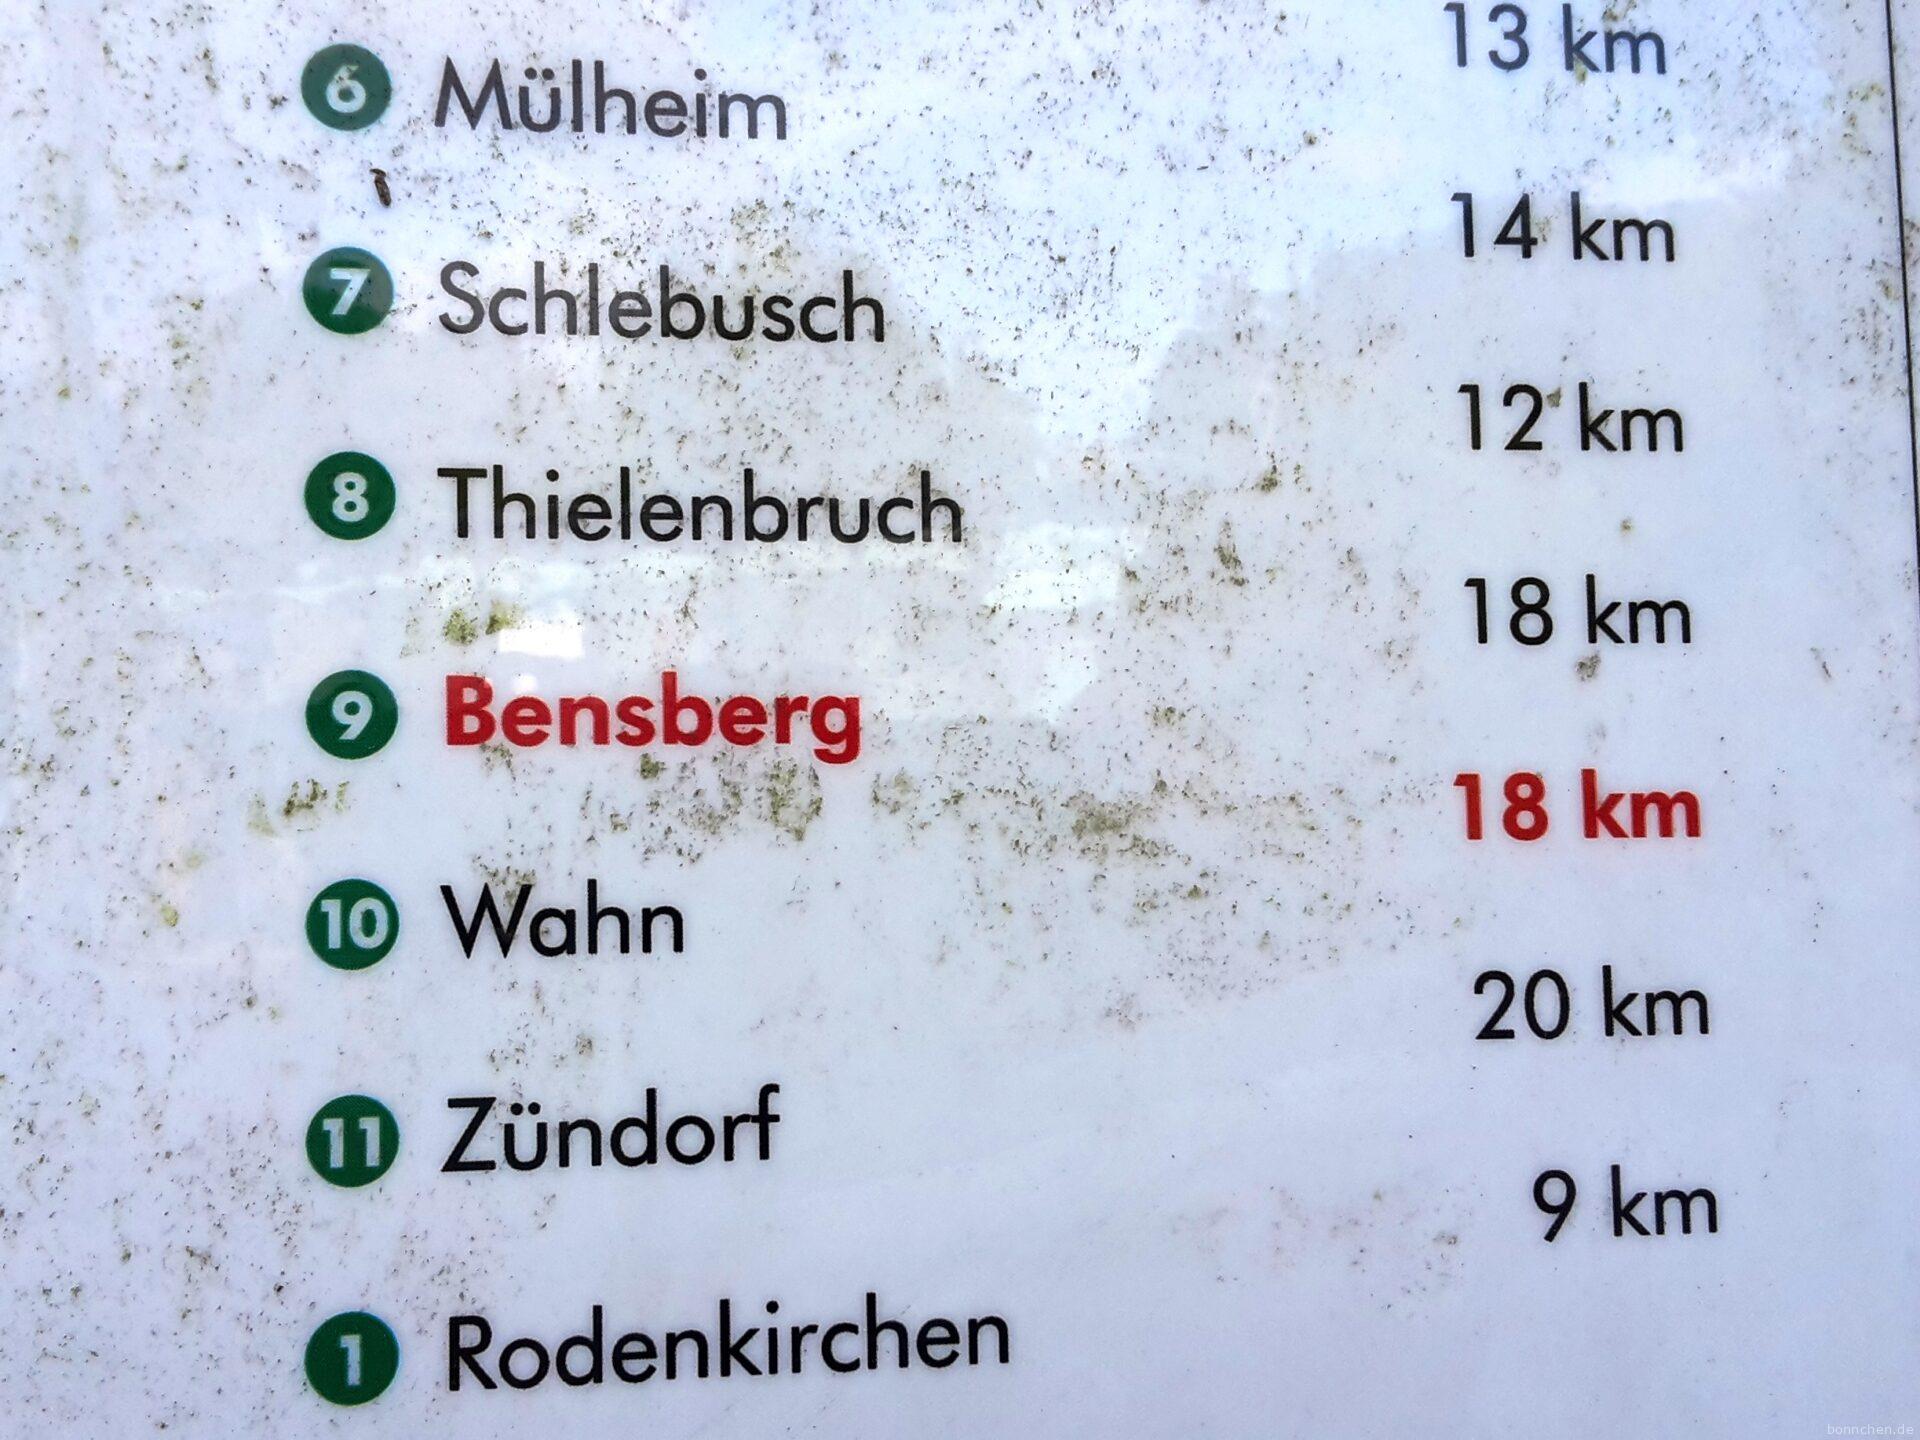 Kölnpfad Etappe 9 nach Bensberg in 18 km